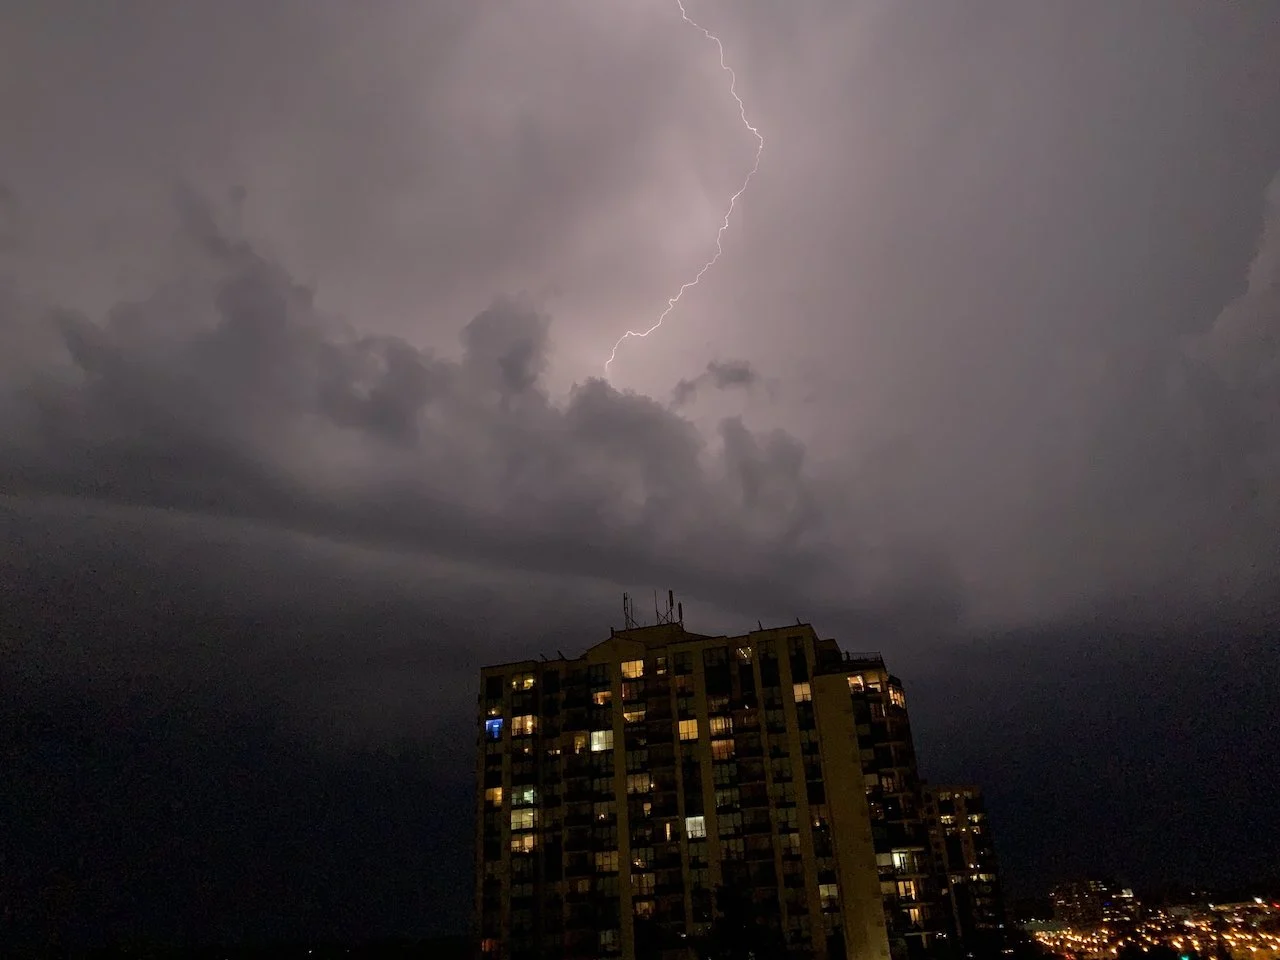 Lightning in Barrie, Ont. /Neil Taylor